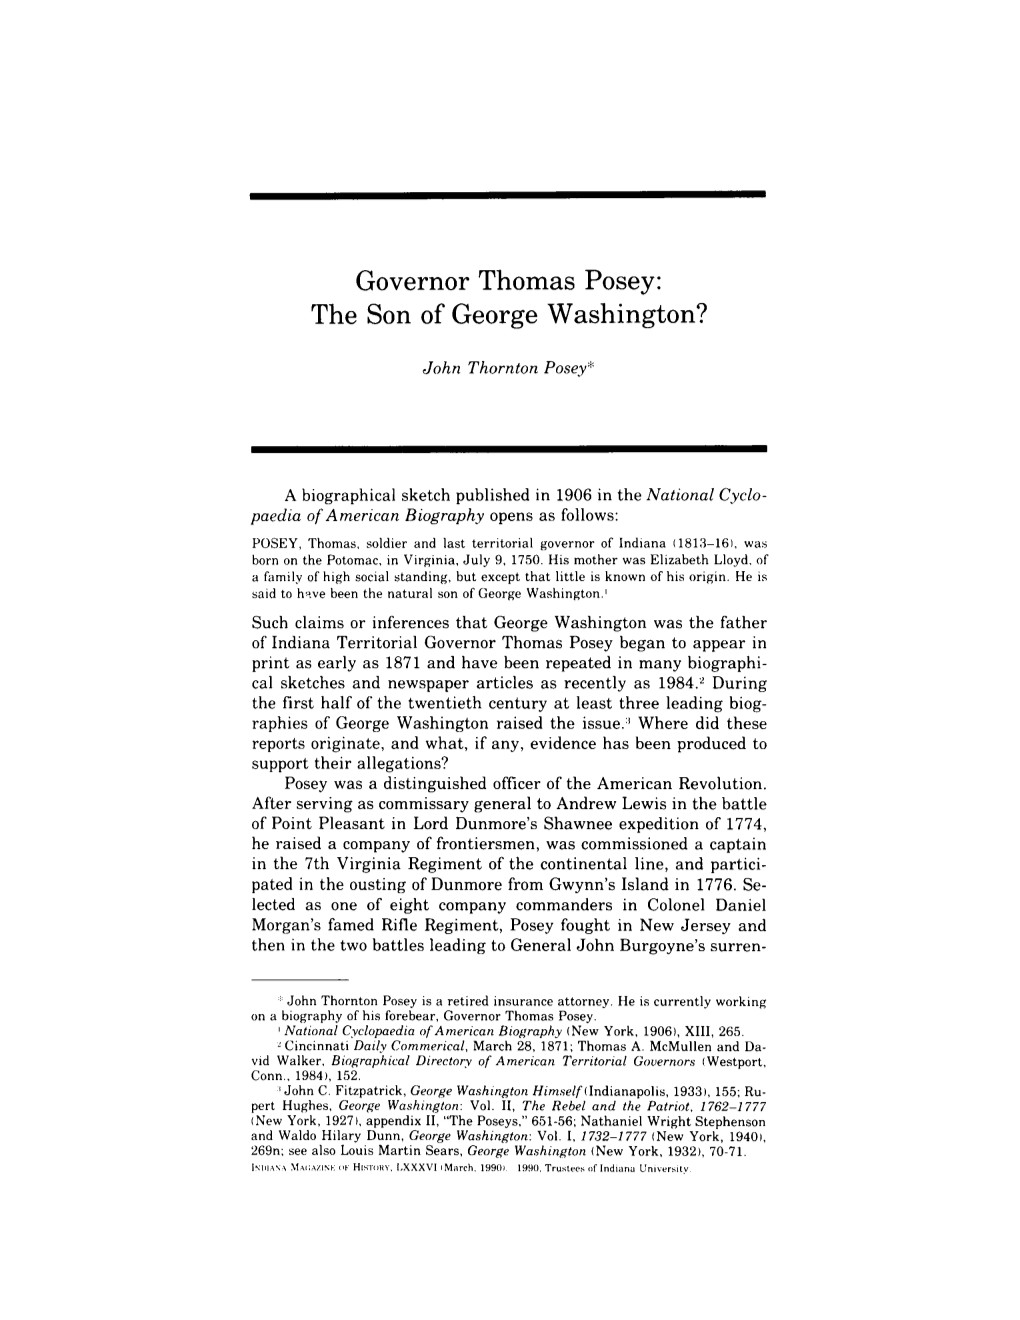 Governor Thomas Posey: the Son of George Washington?